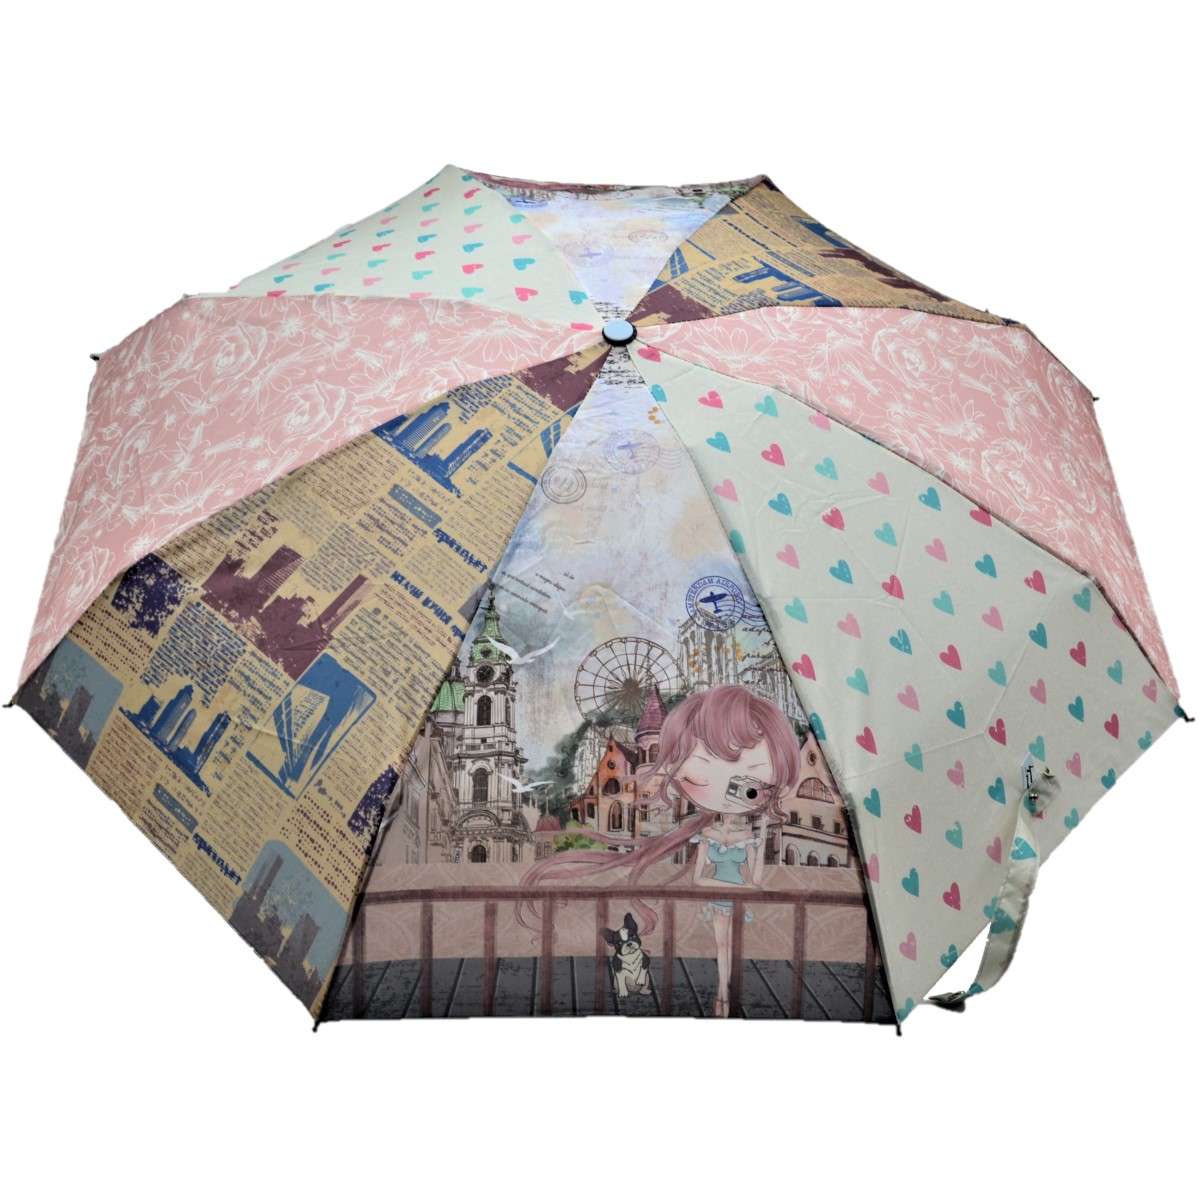 Sweet Candy esernyő tokban 98 cm - Turista